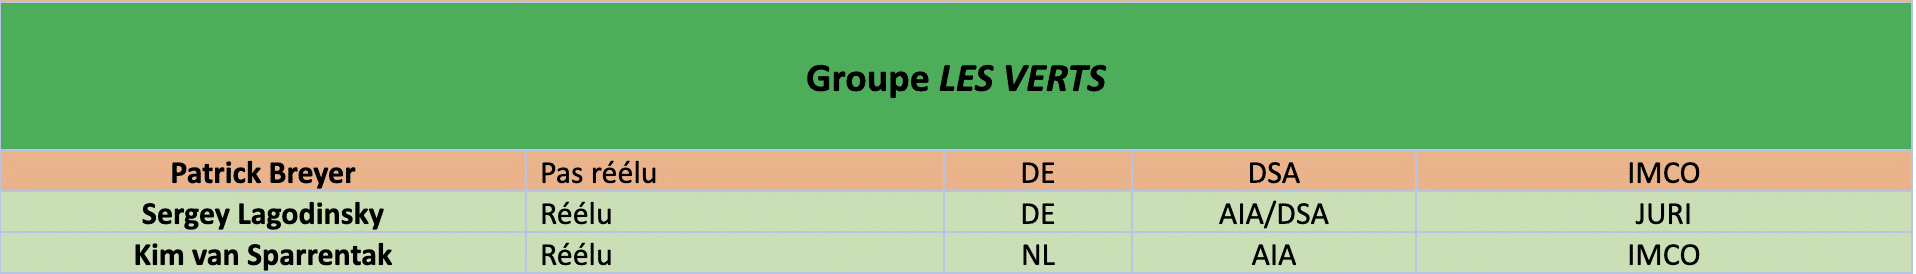 Groupe Les Verts